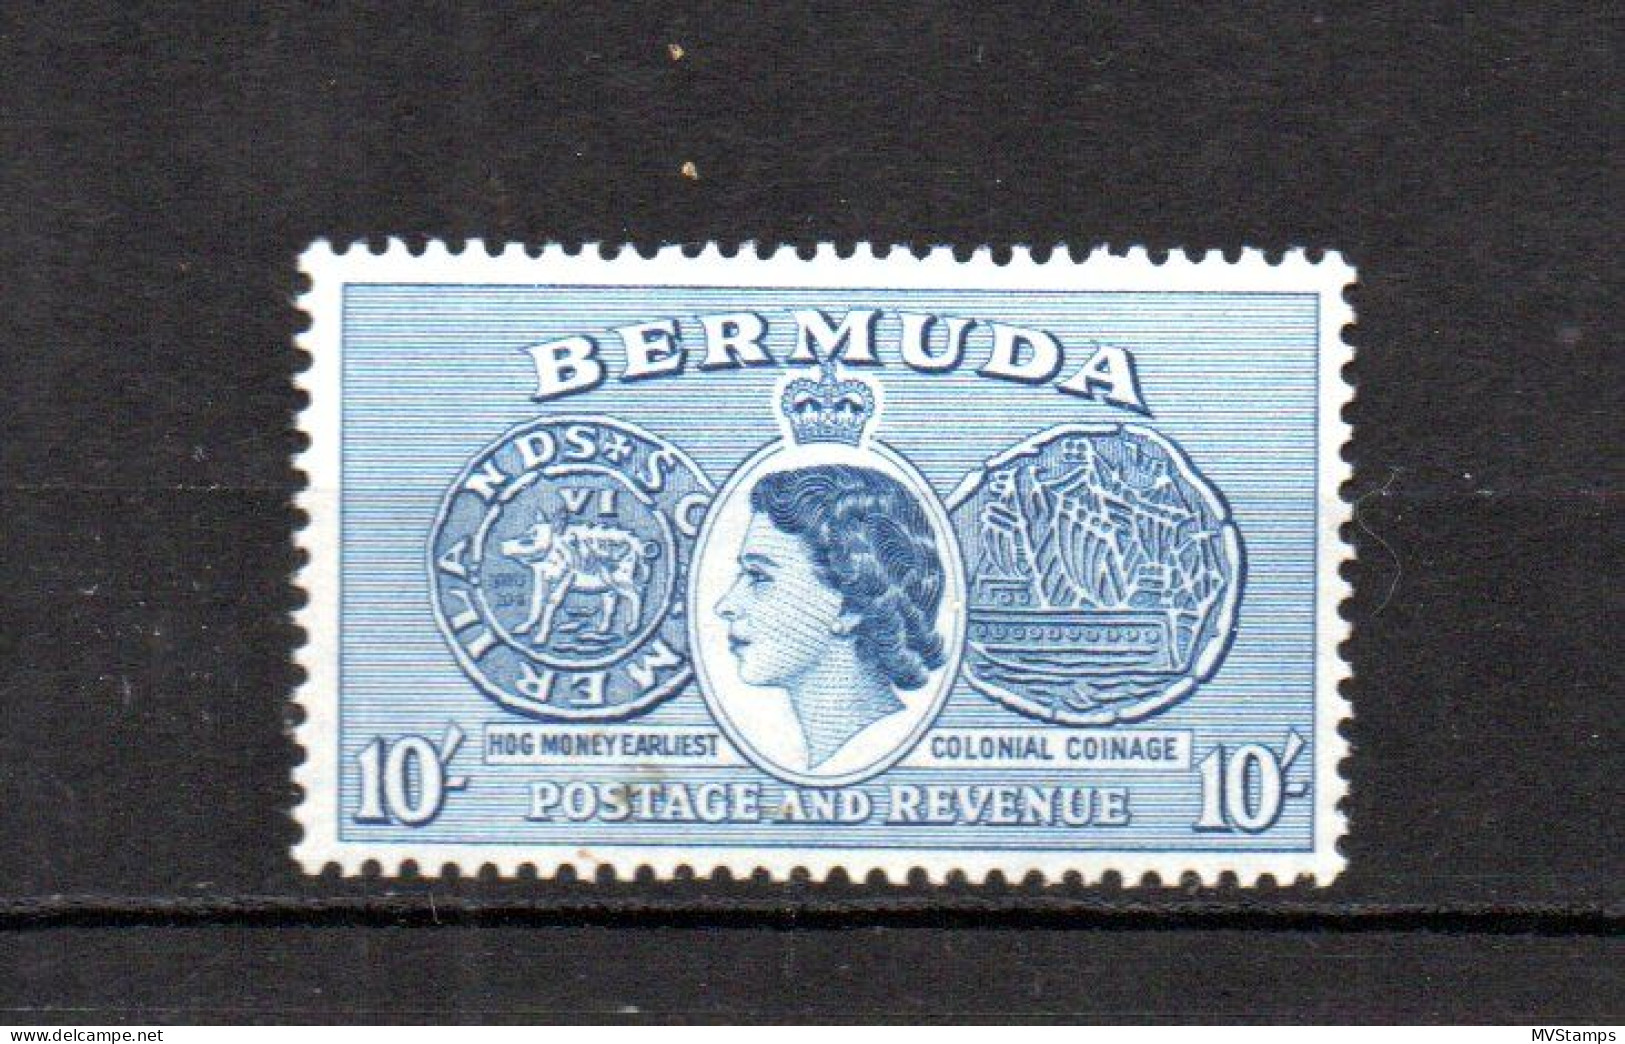 Bermuda 1953 Old Def. Stamp 10 Shilling (Michel 146) Nice MLH - Bermuda